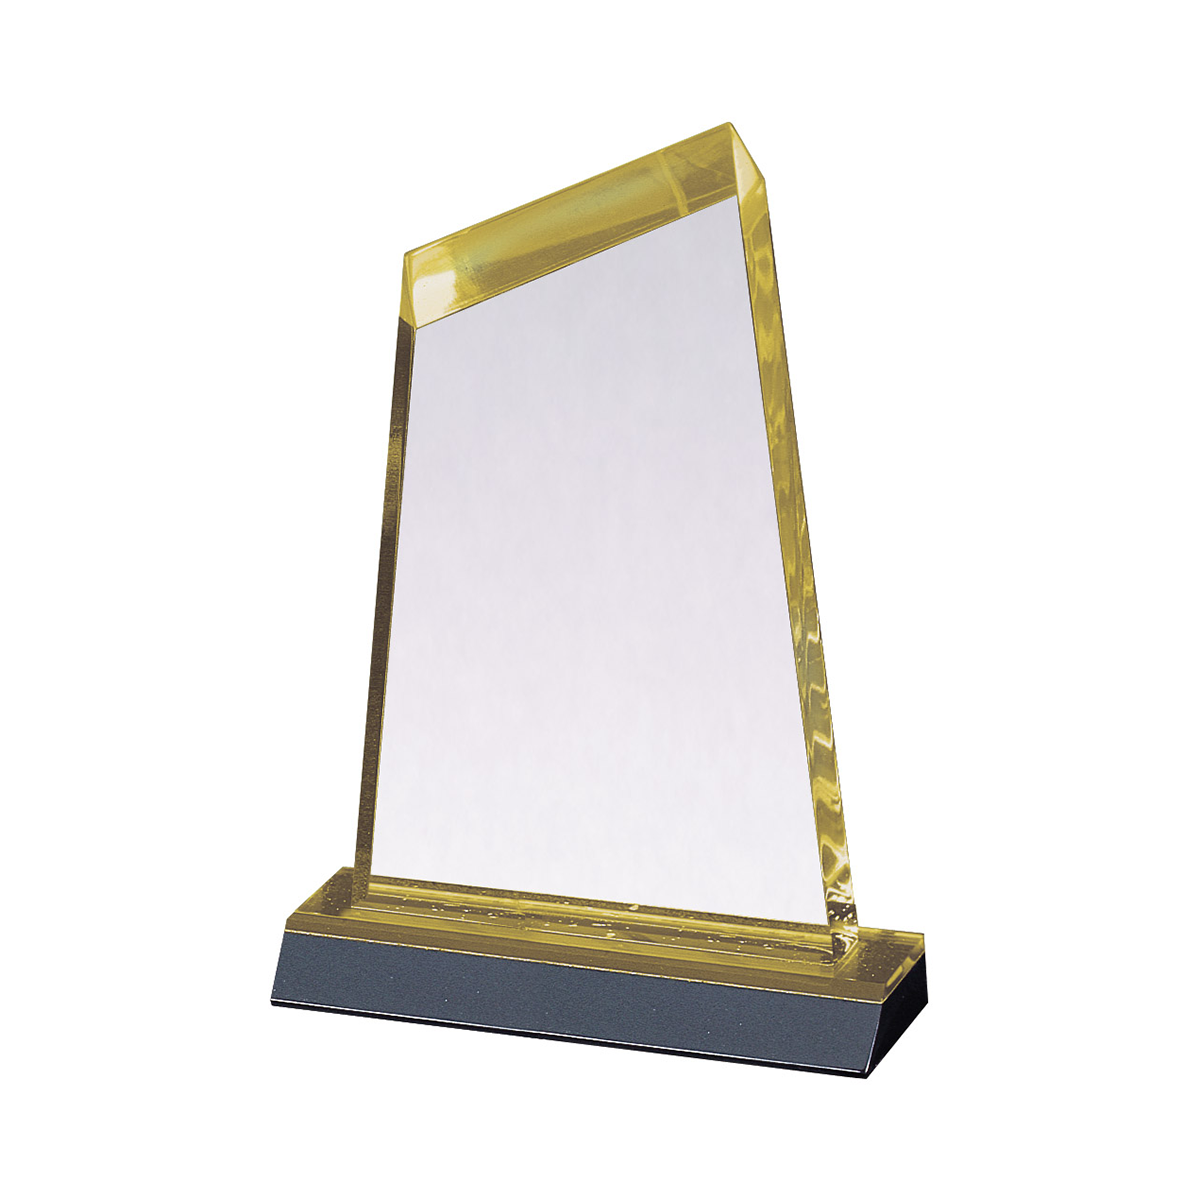 Mirror Series Peak Acrylic Award in Gold